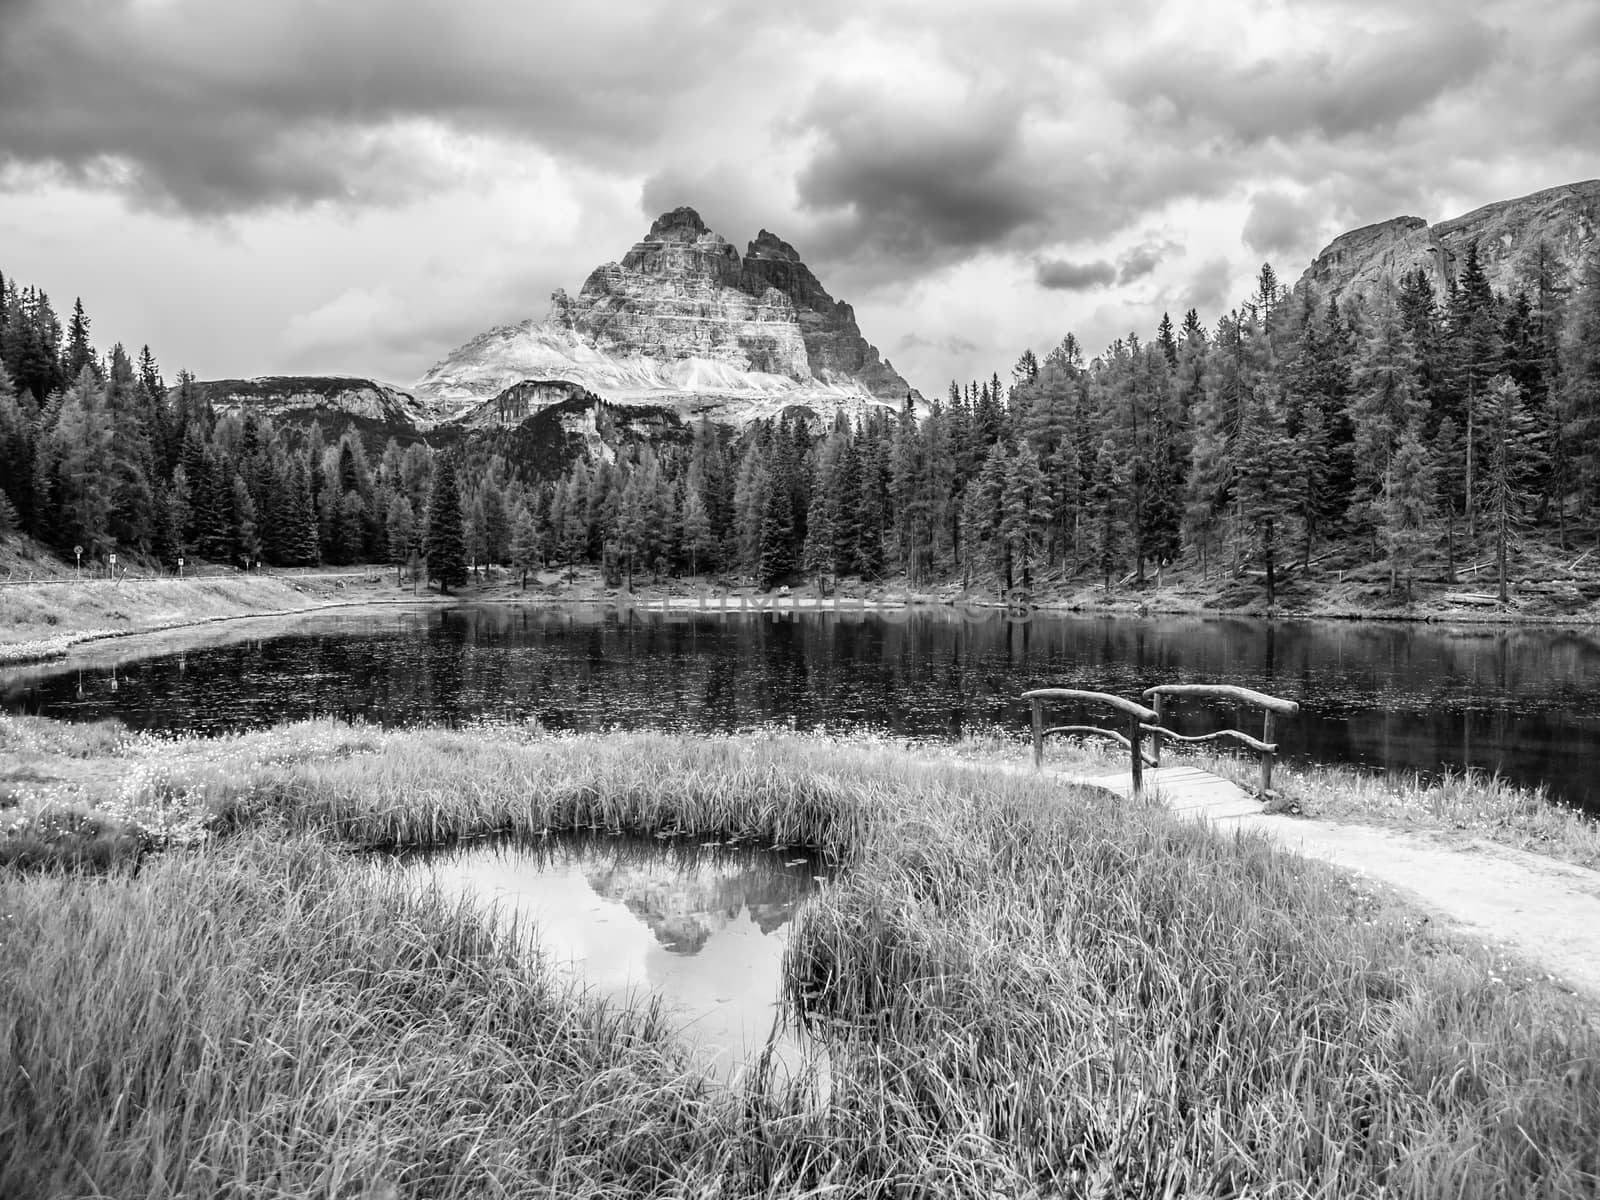 Tre Cime di Lavaredo Mountain reflected in water od Antorno Lake, Dolomites, Italy. Black and white image.